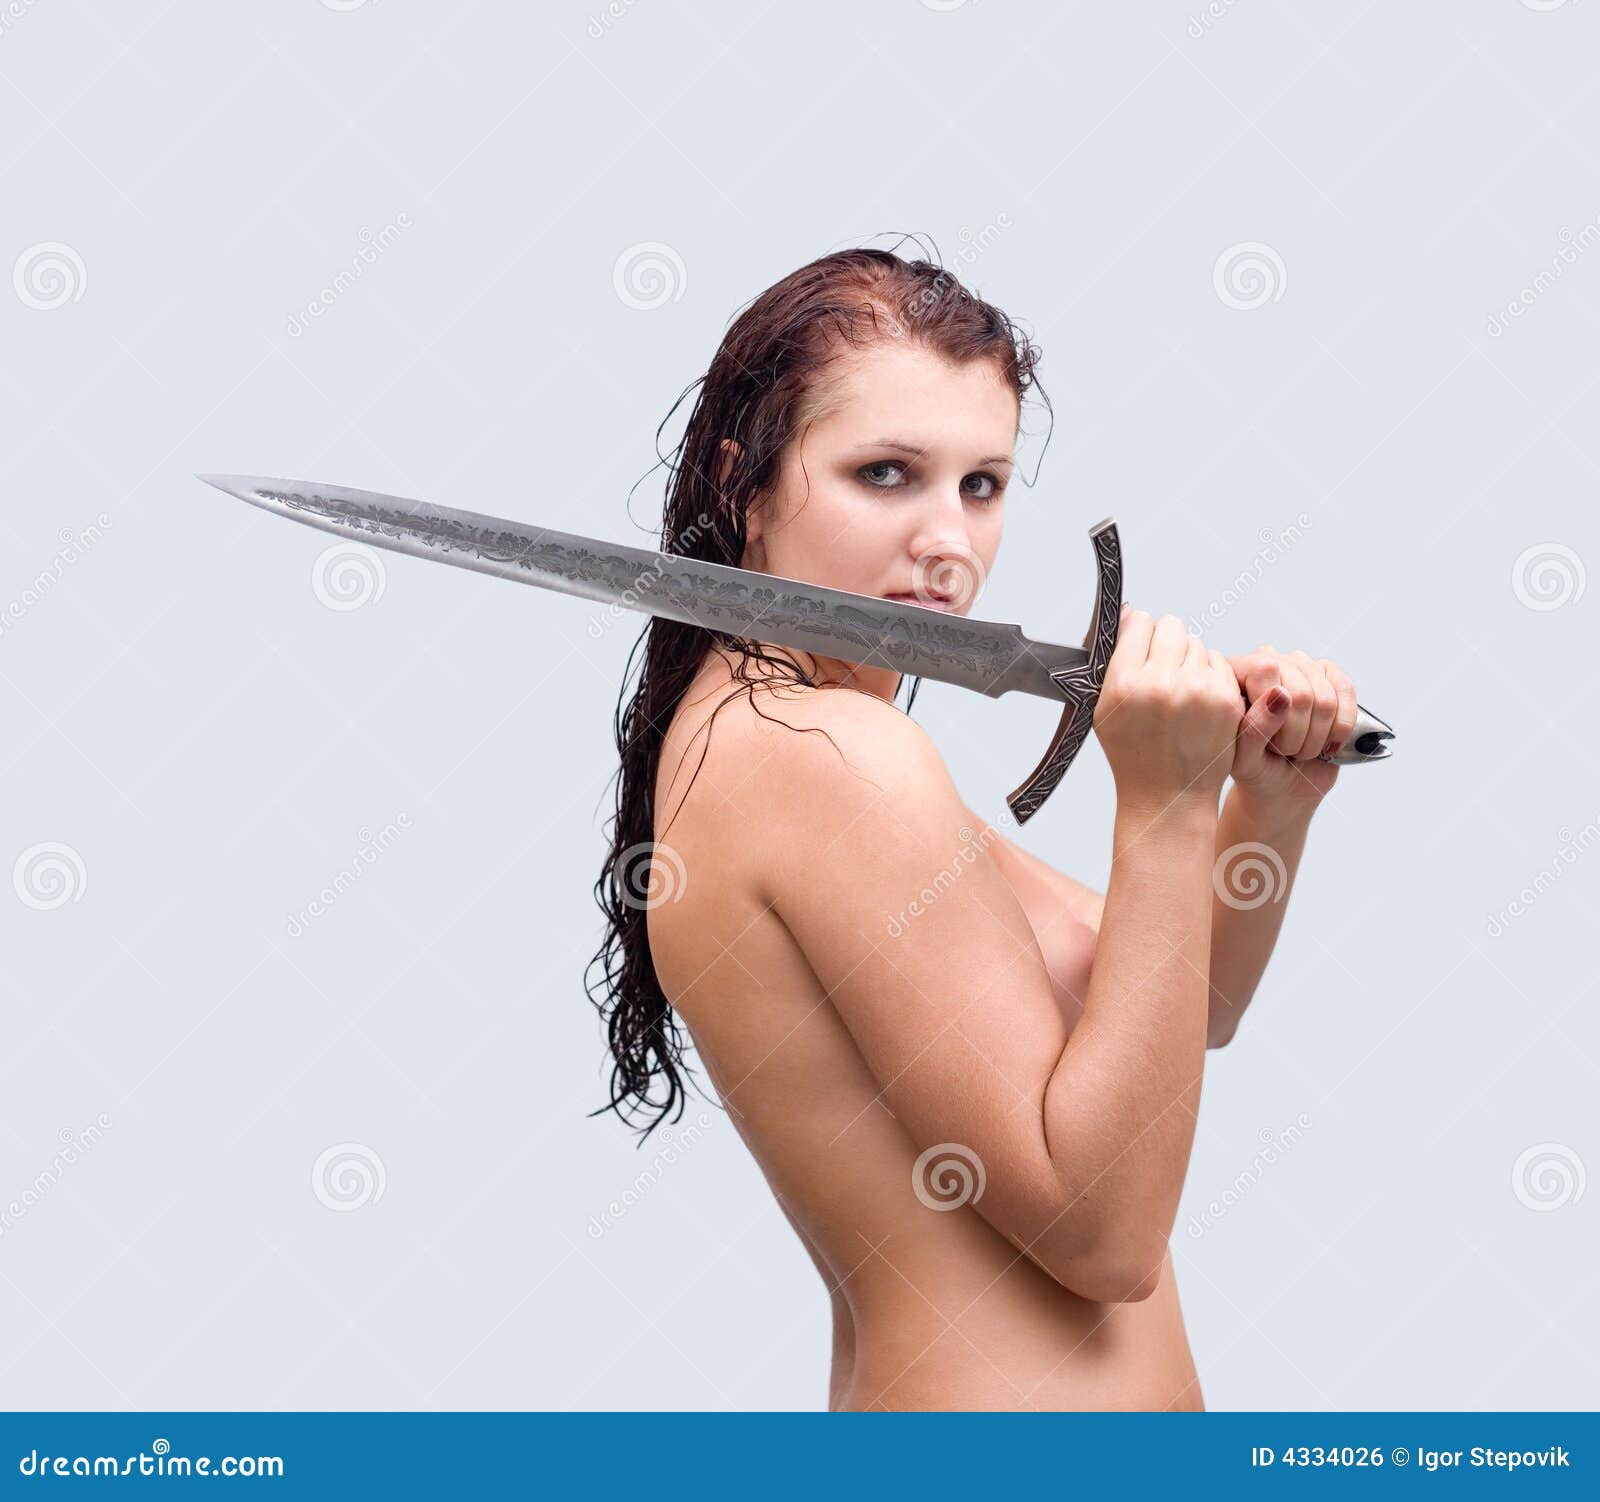 brad ohlrich share nude girls with swords photos